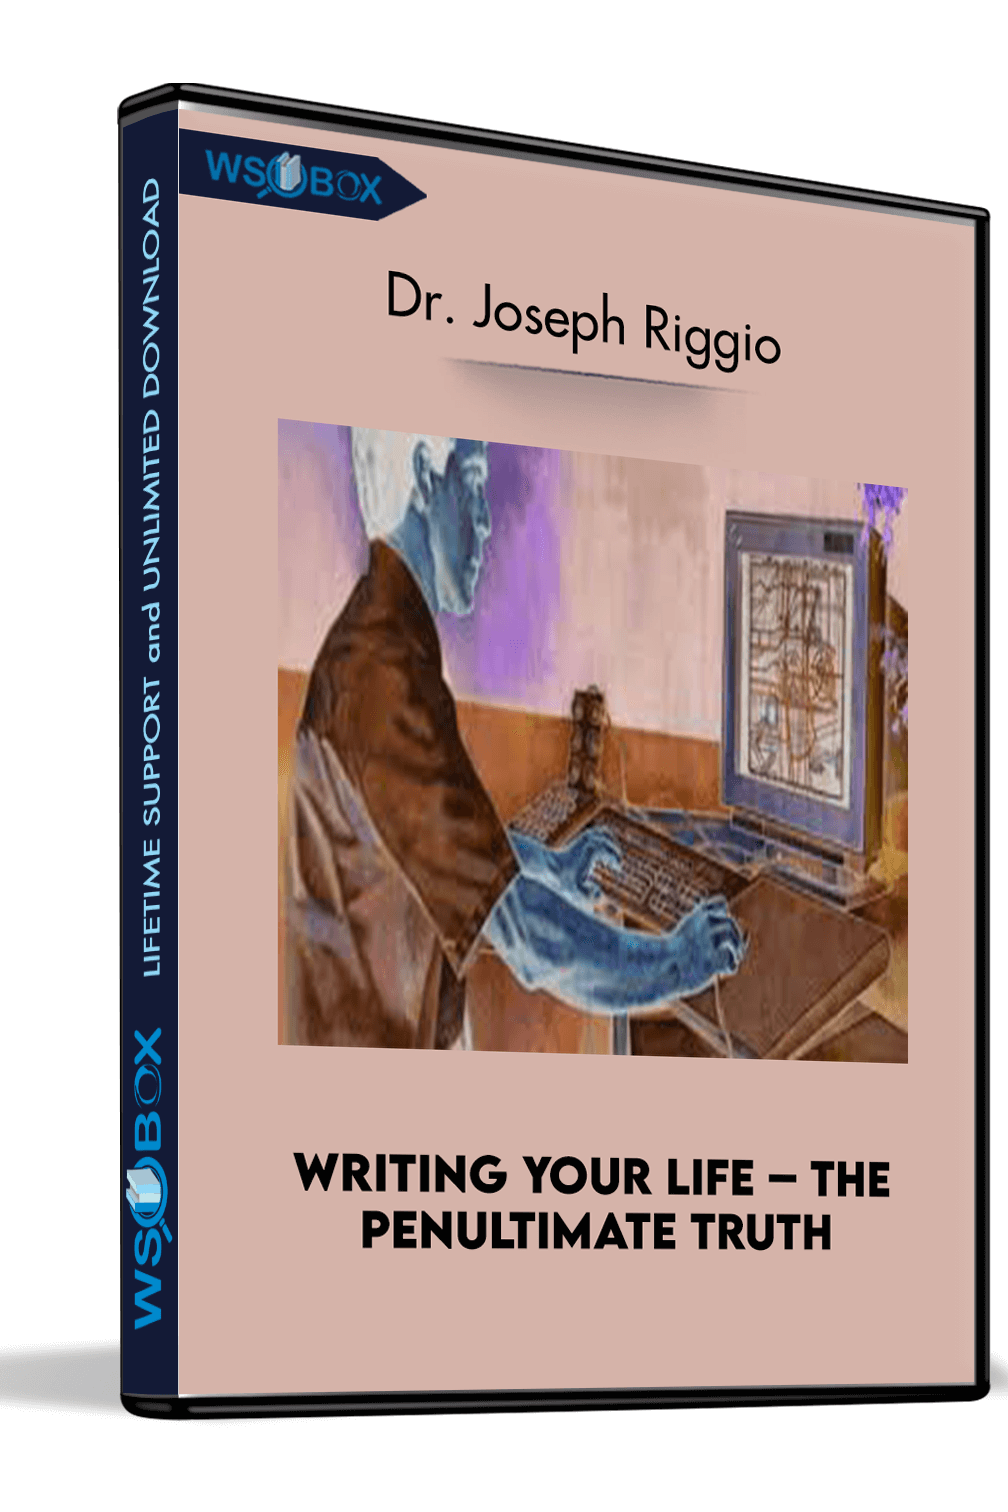 writing-your-life-the-penultimate-truth-dr-joseph-riggio